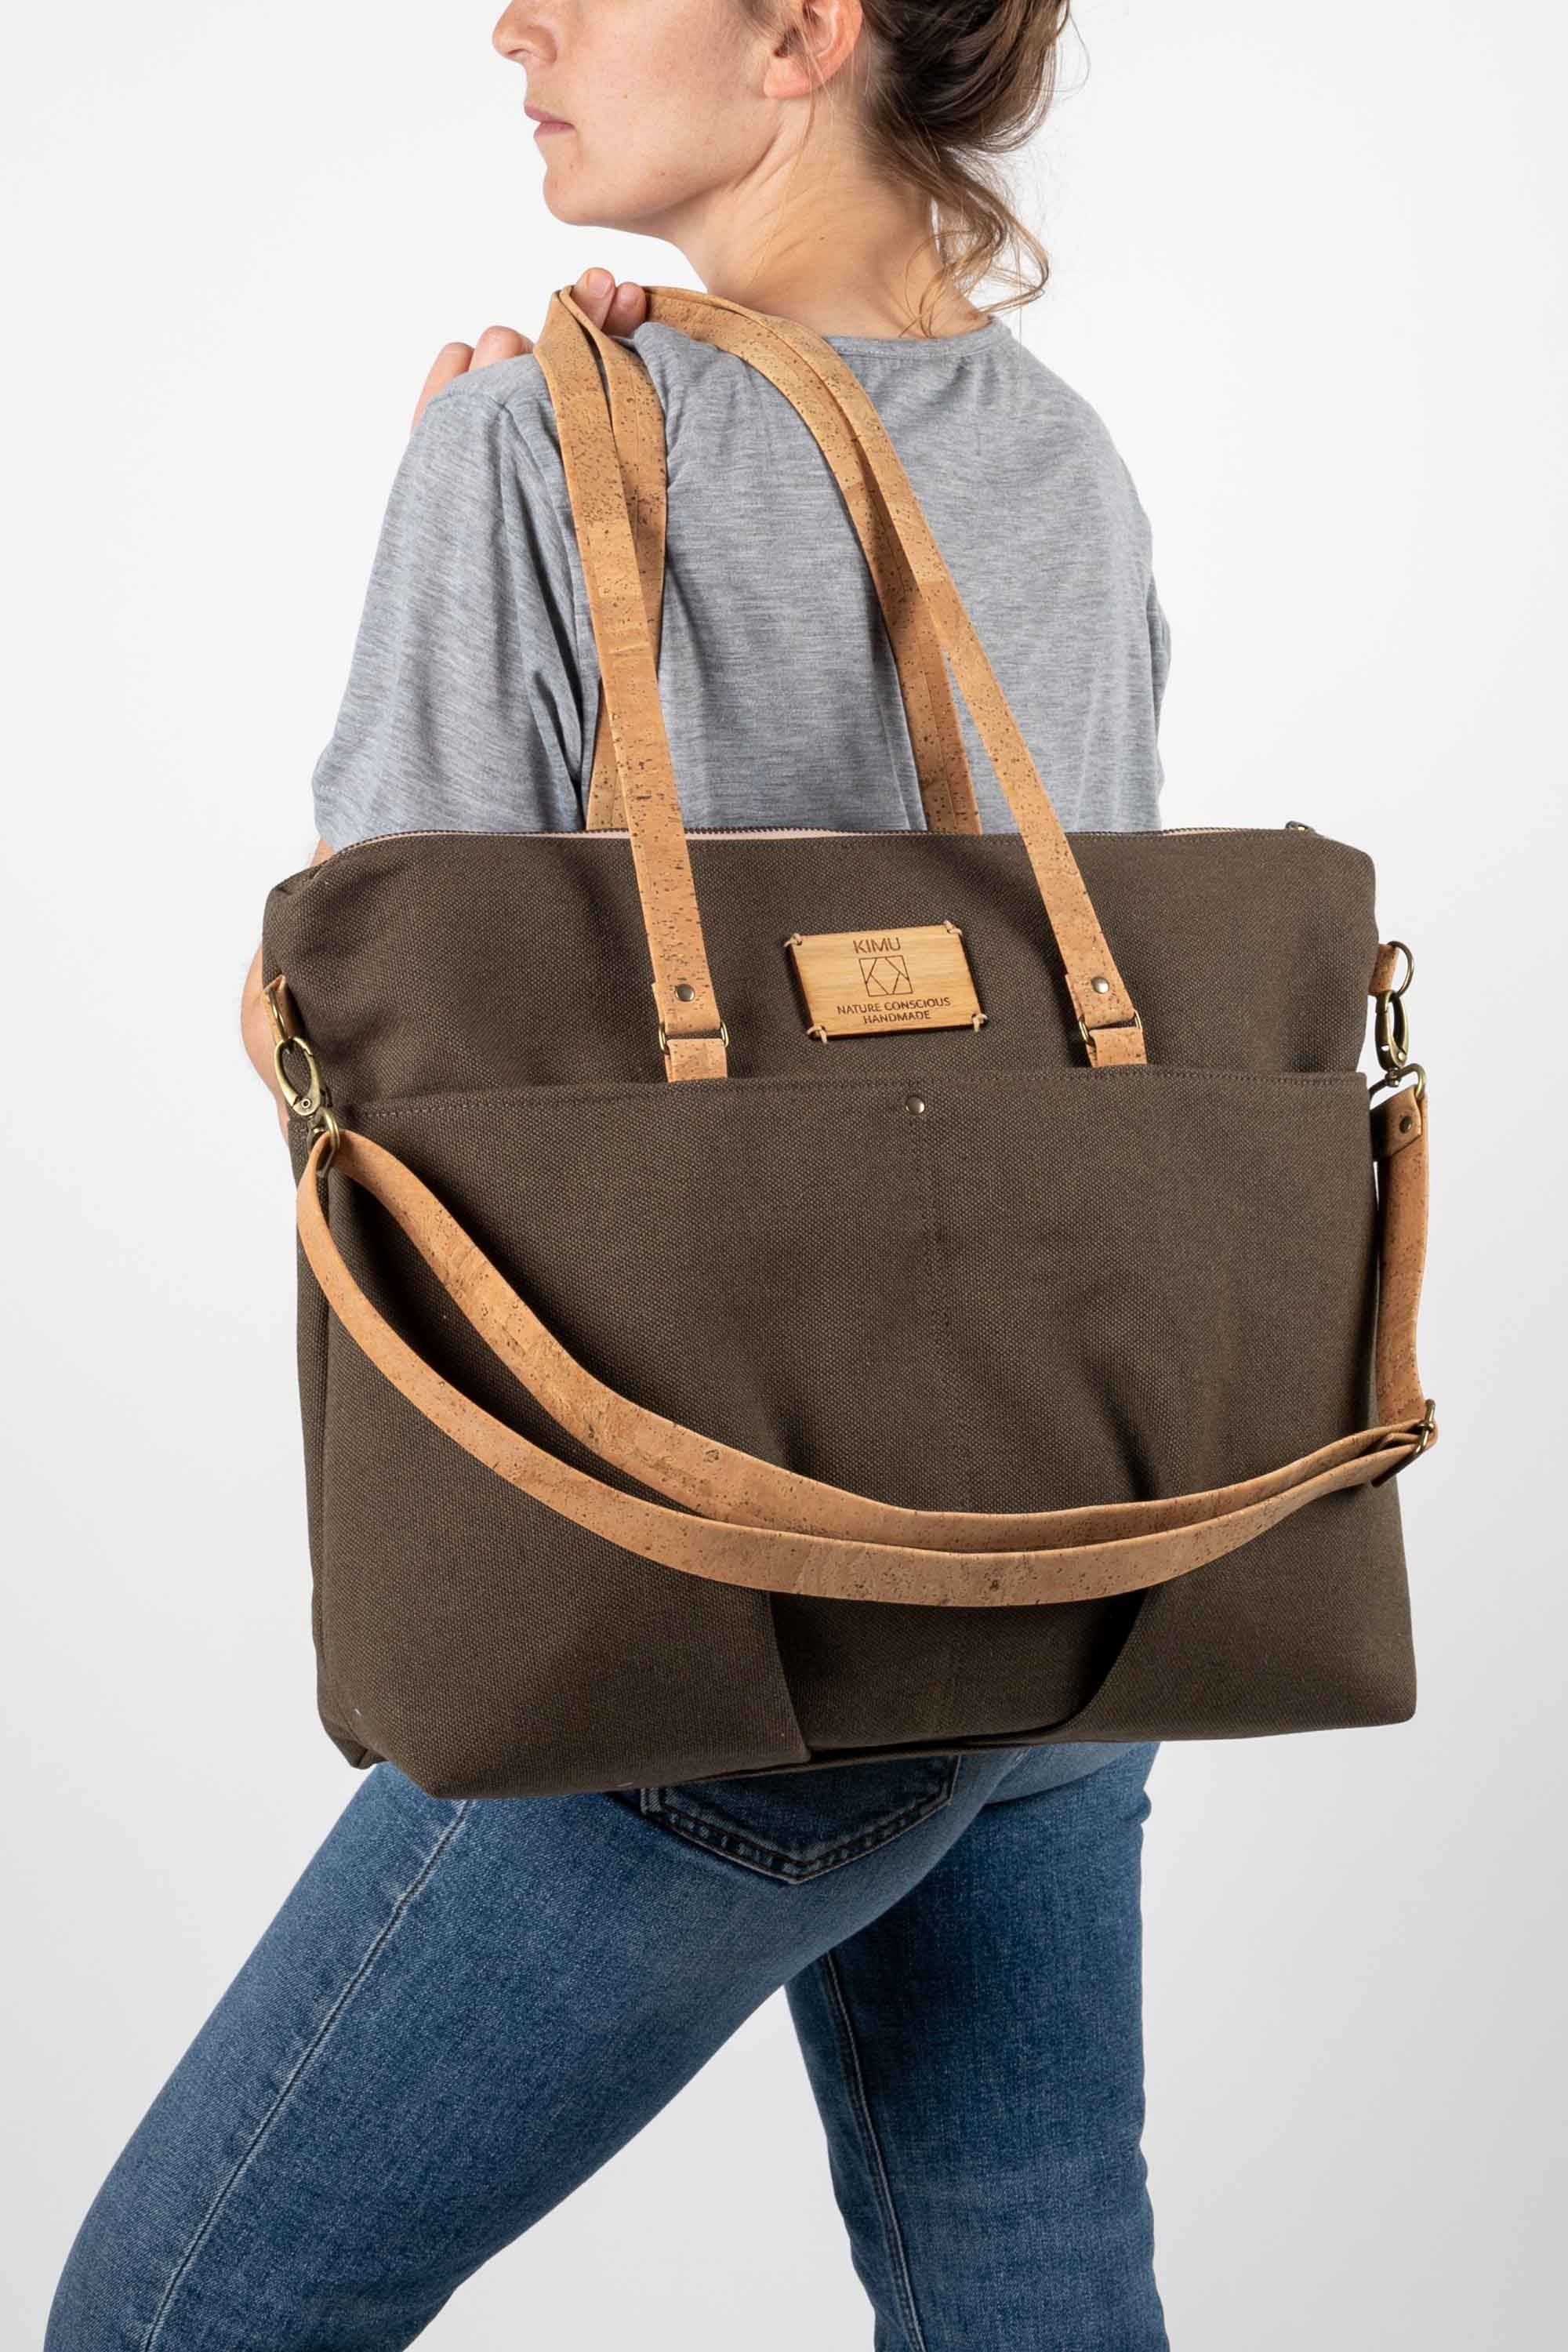 Woman Man Handbags Tote Bag Spaceman Sway Moon Galaxy Zipper Tote Teacher  Shoulder Bag for Work Shopping L Size